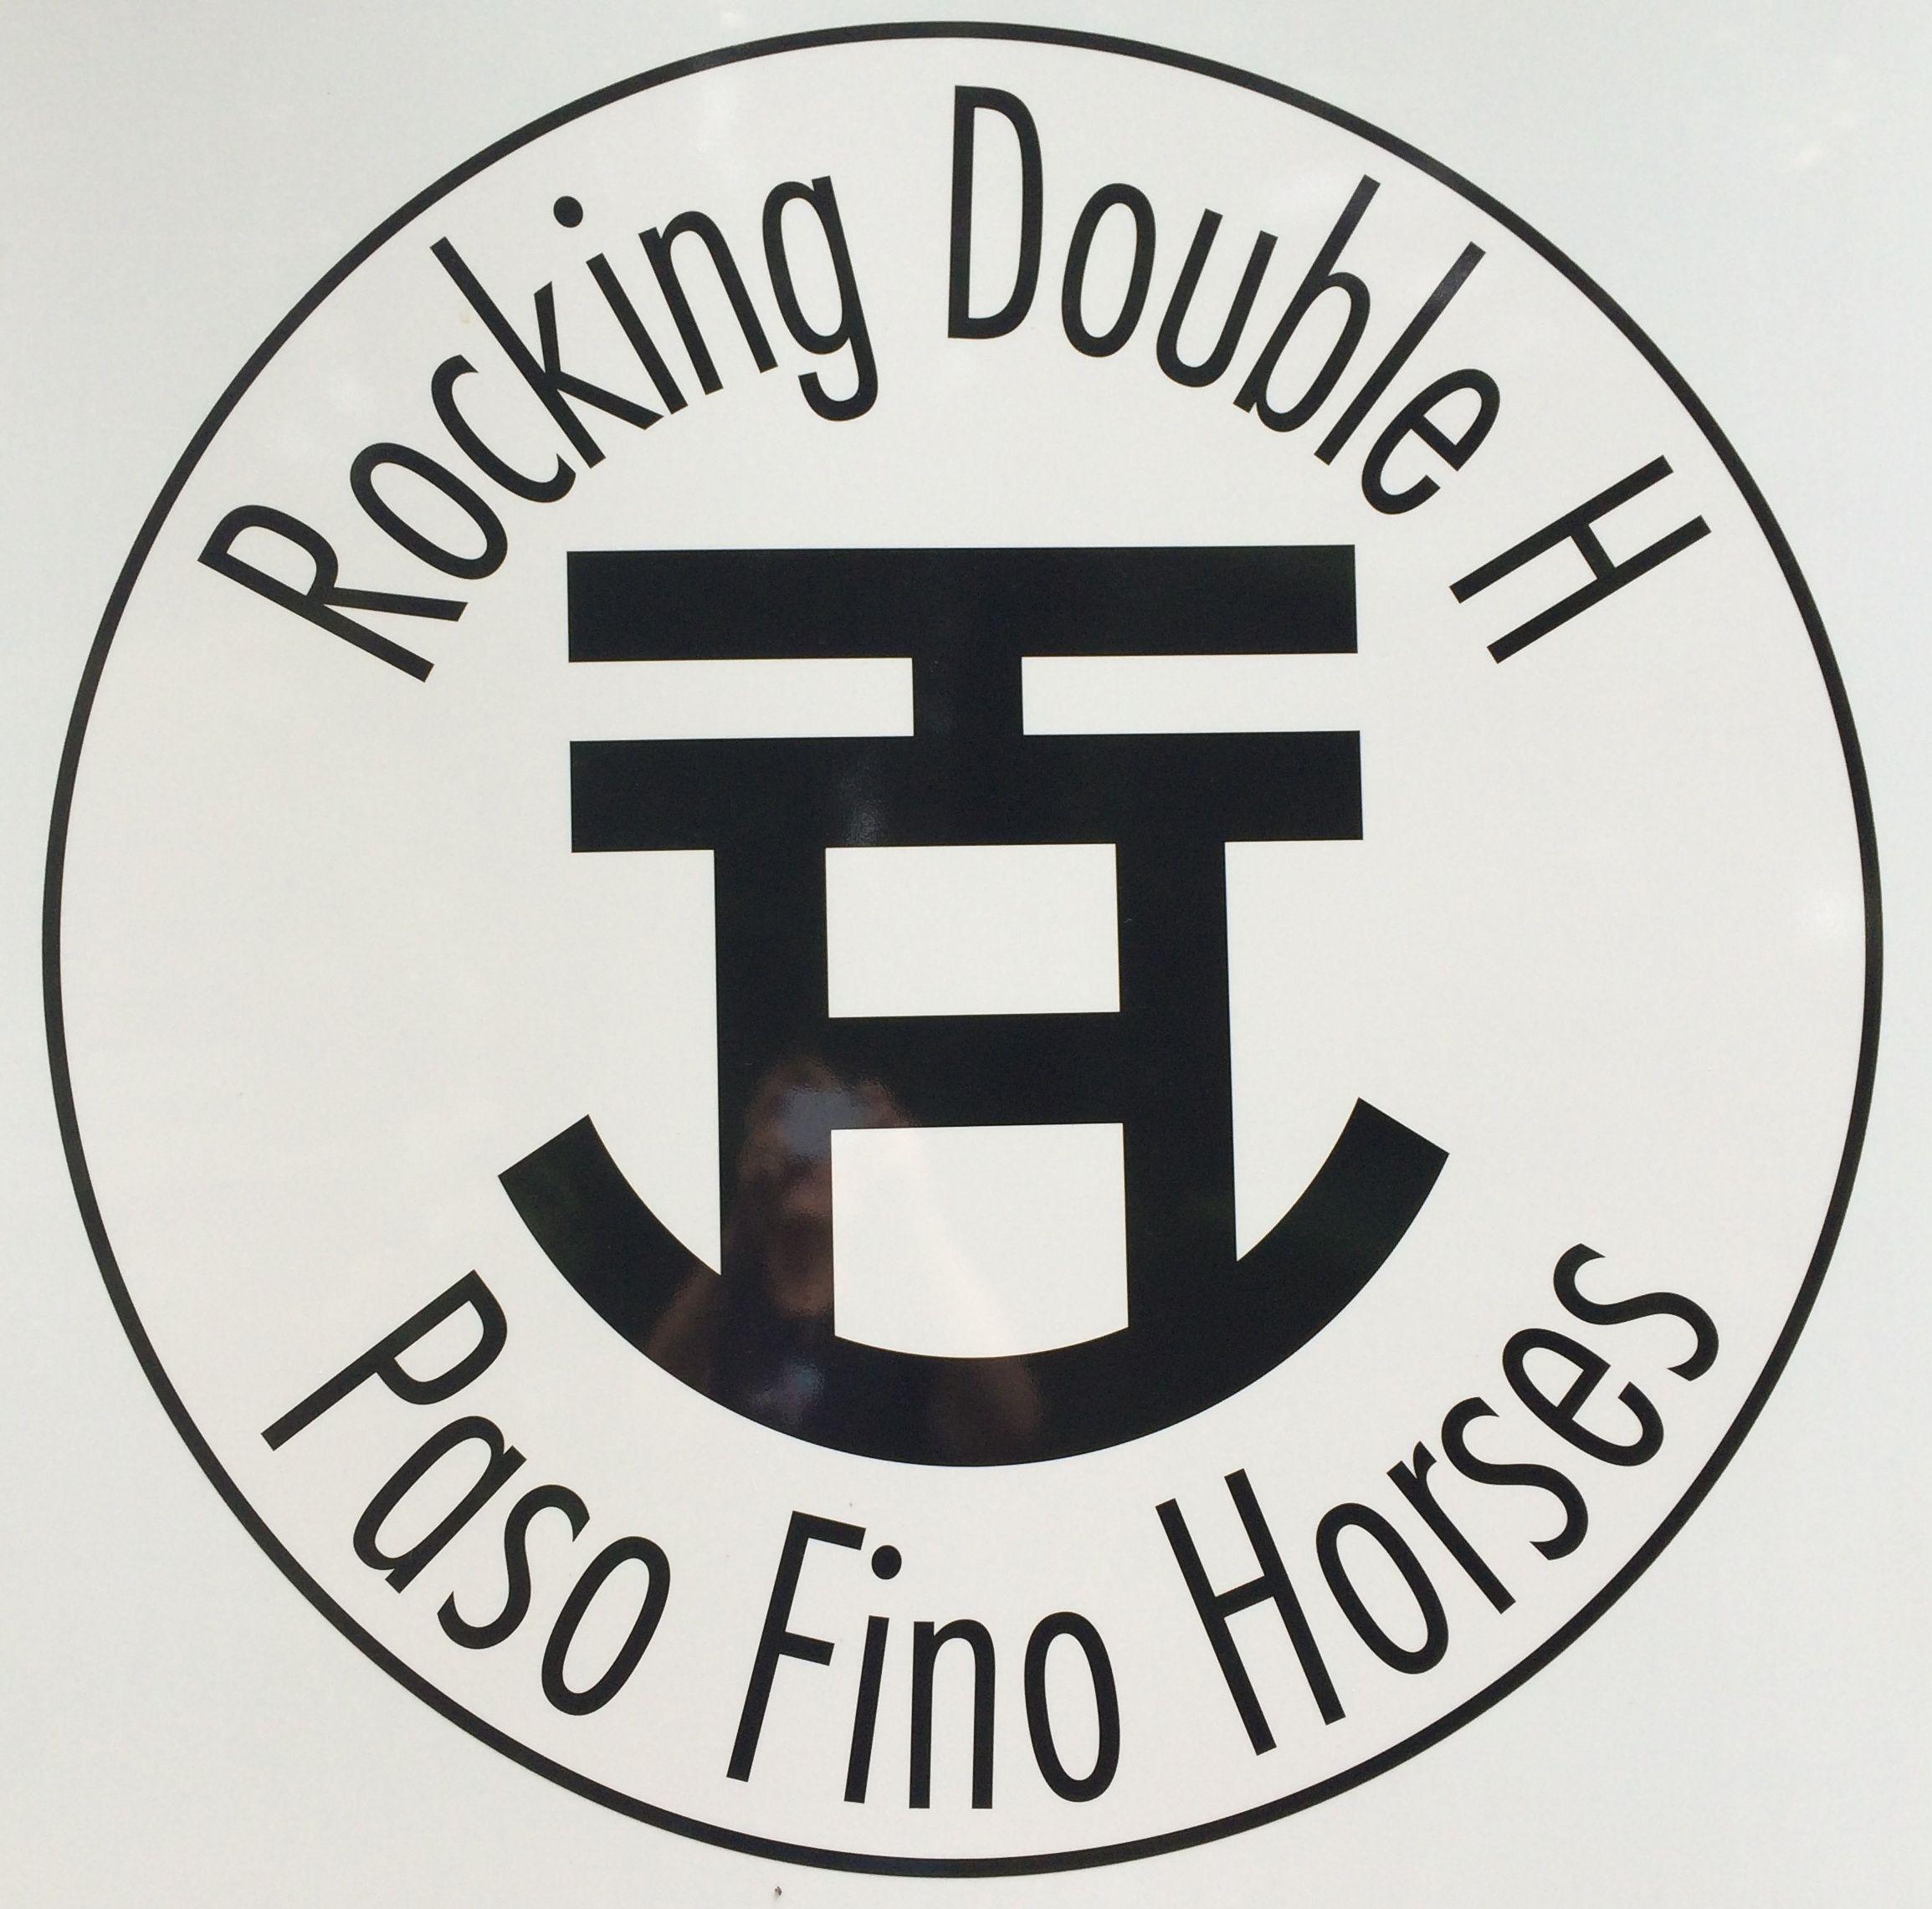 Double H Logo - Rocking Double H Paso Fino Horses. Northwest Paso Fino Horse